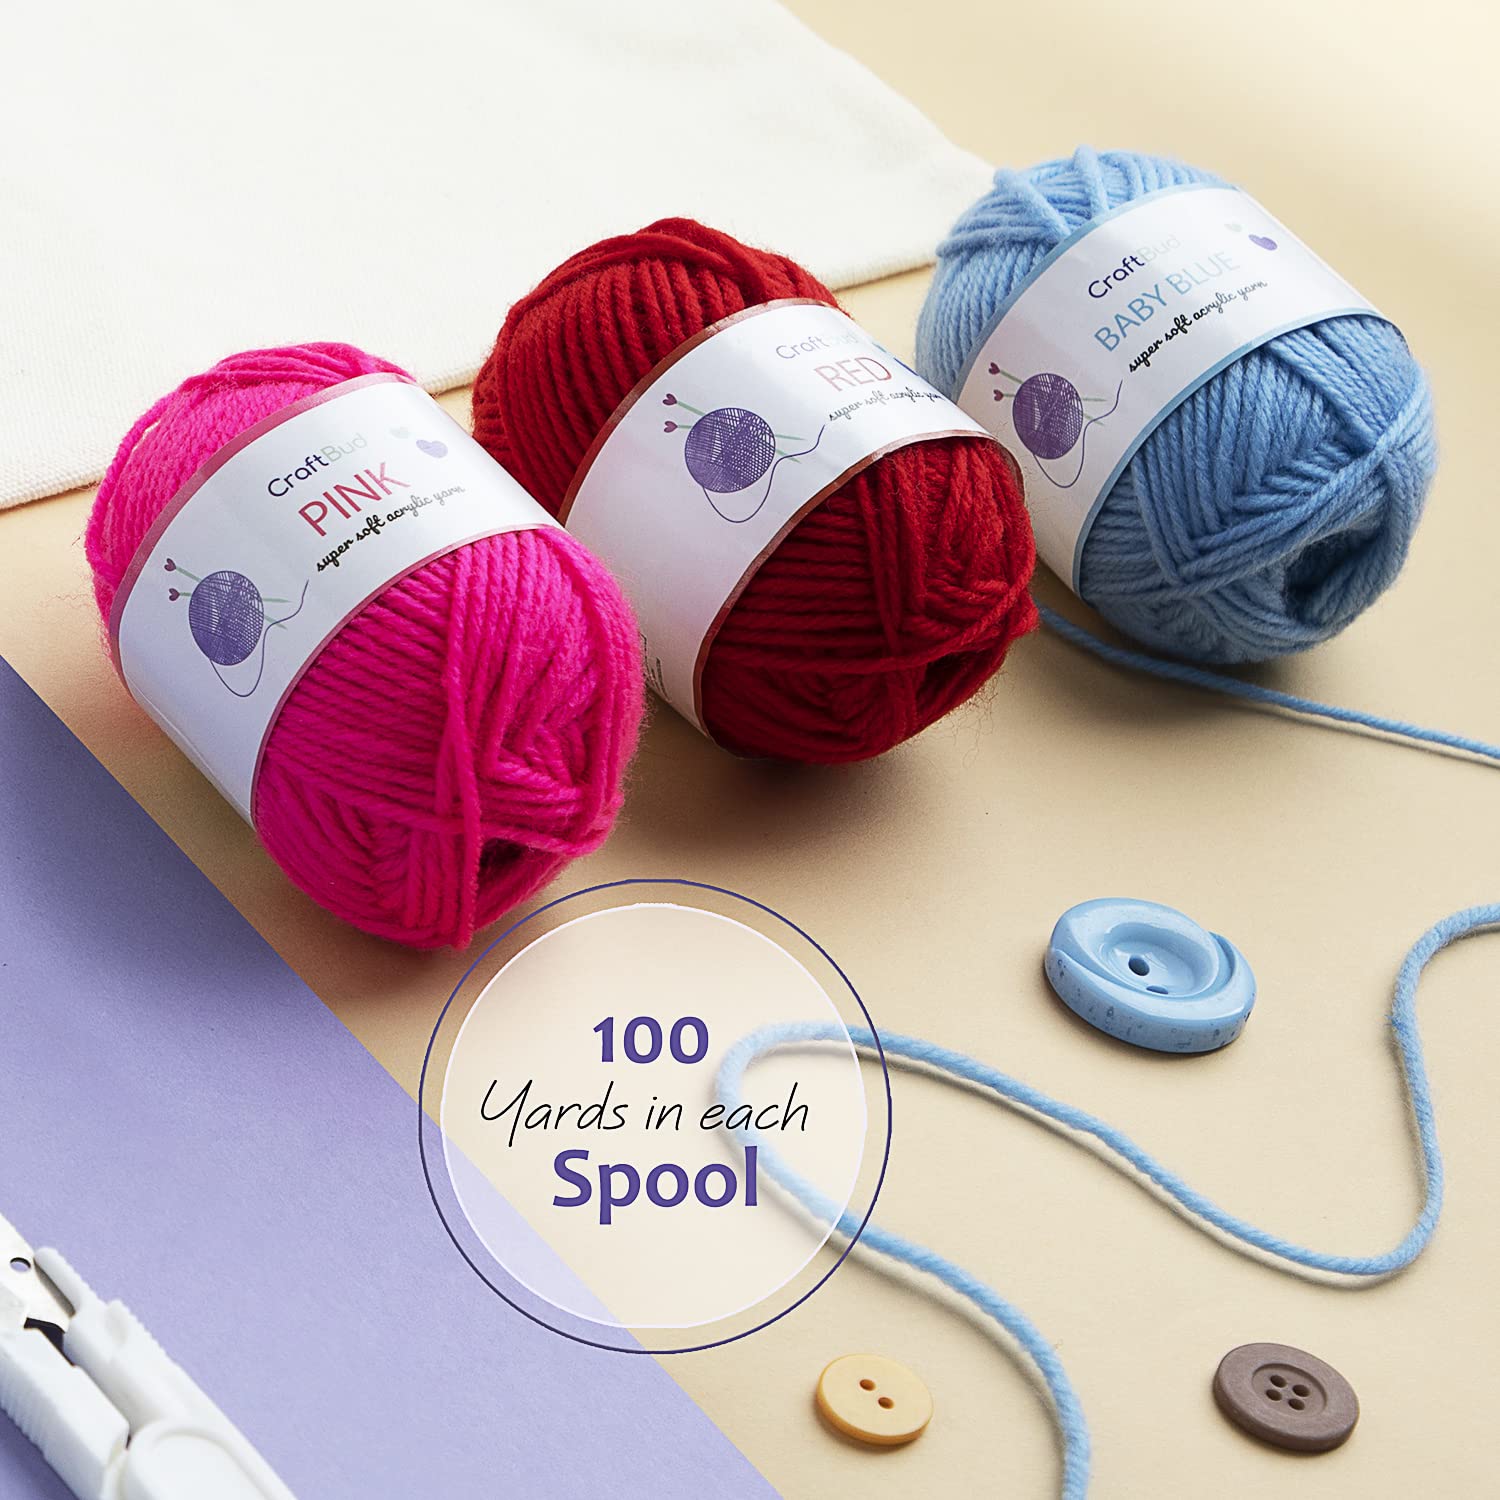 Acrylic Yarn Skeins 12 x 50g - 1200 Yards - Yarn for Crocheting - Soft Crochet Yarn for Knitting and Crafts - Multicolored Crochet Craft Yarn for Adults and Kids - 12 Pack